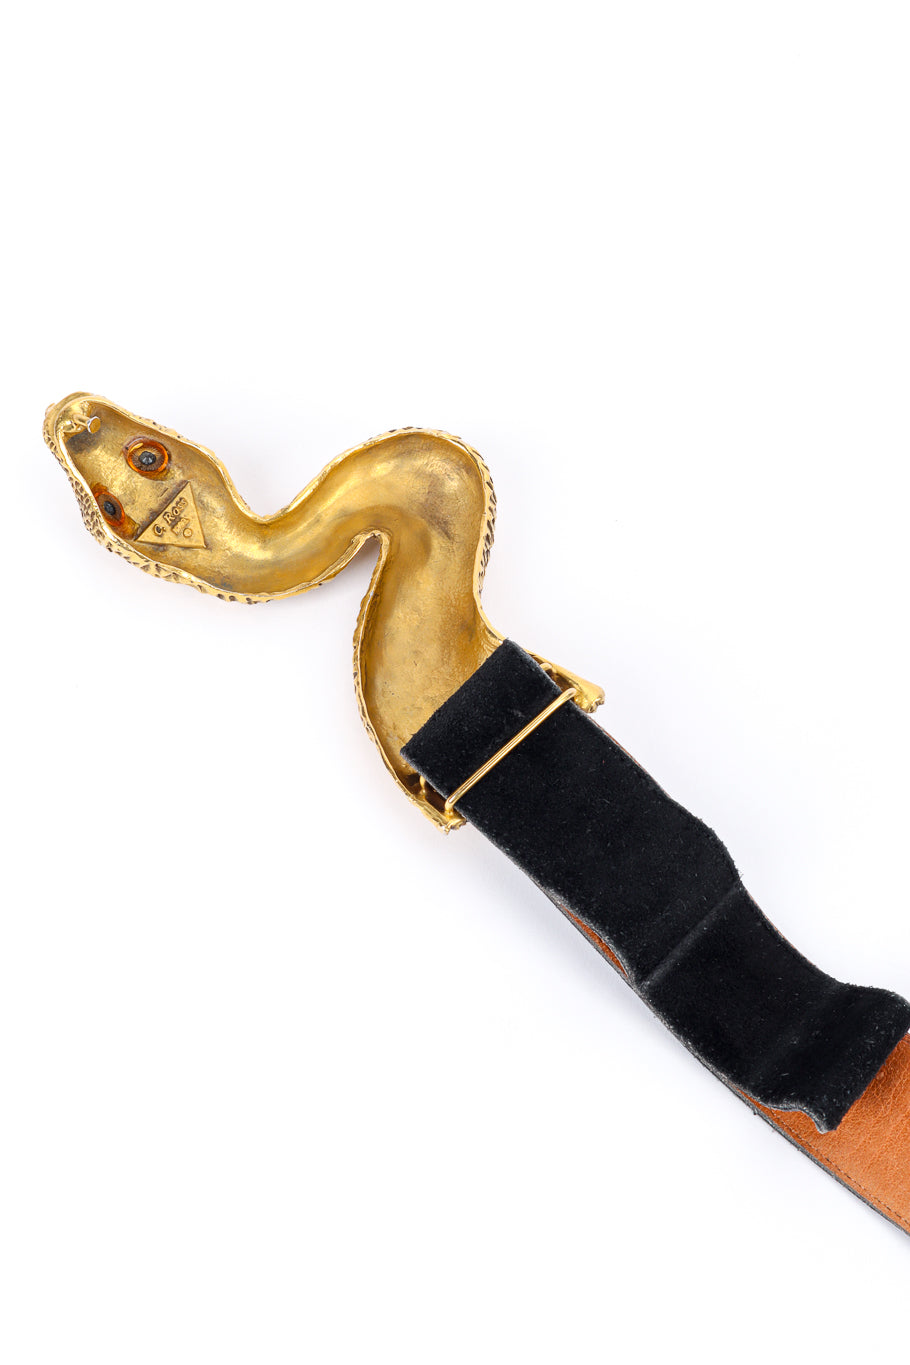 Vintage C. Ross Suede Snake Buckle Belt buckle back closeup @recessla